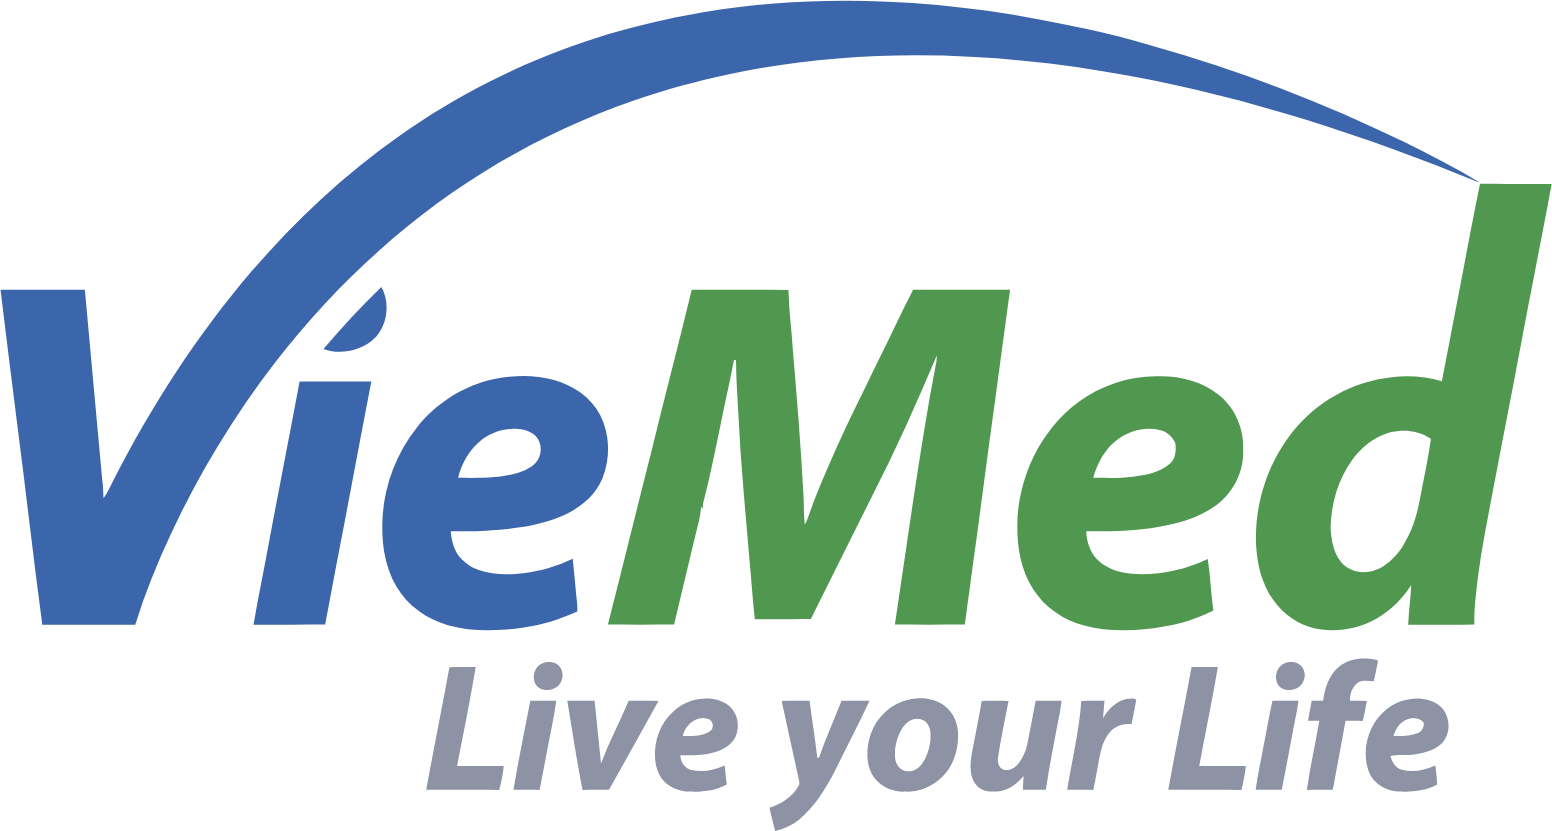 Viemed Healthcare logo large (transparent PNG)